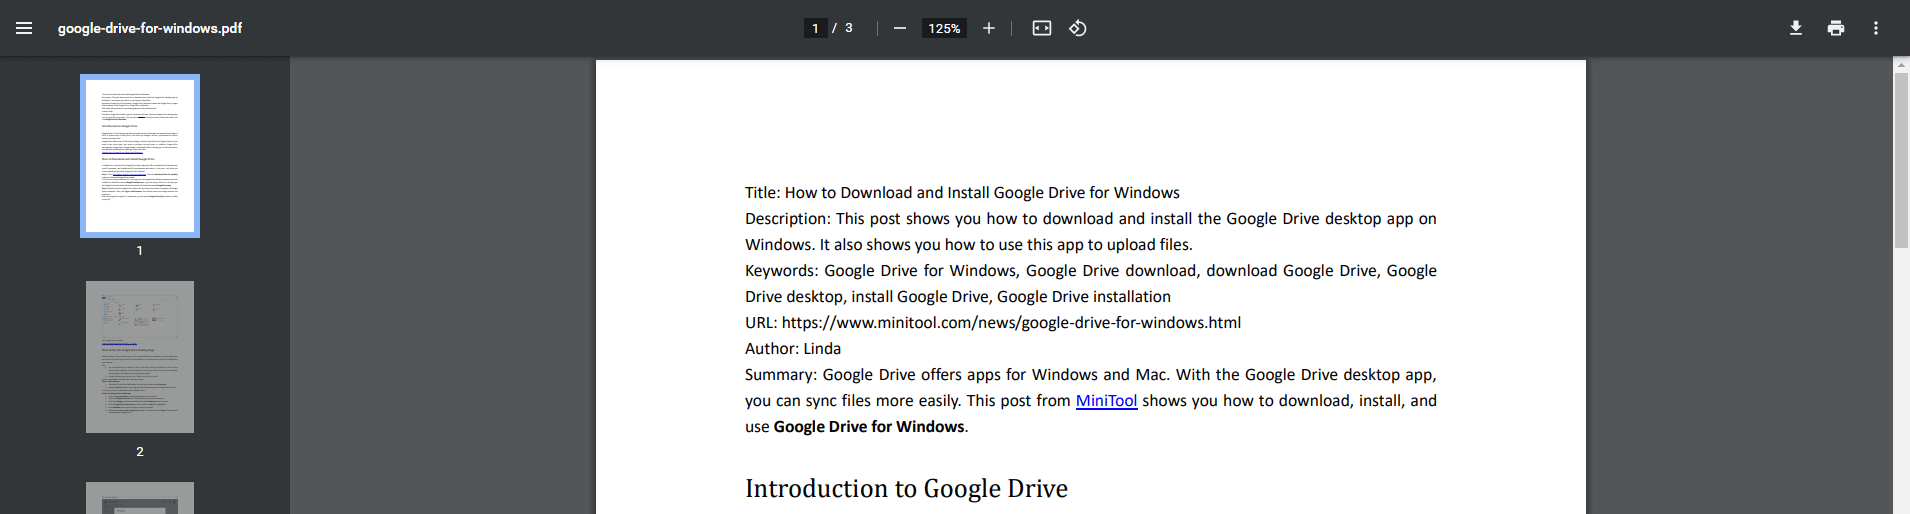 view PDF using Google Chrome